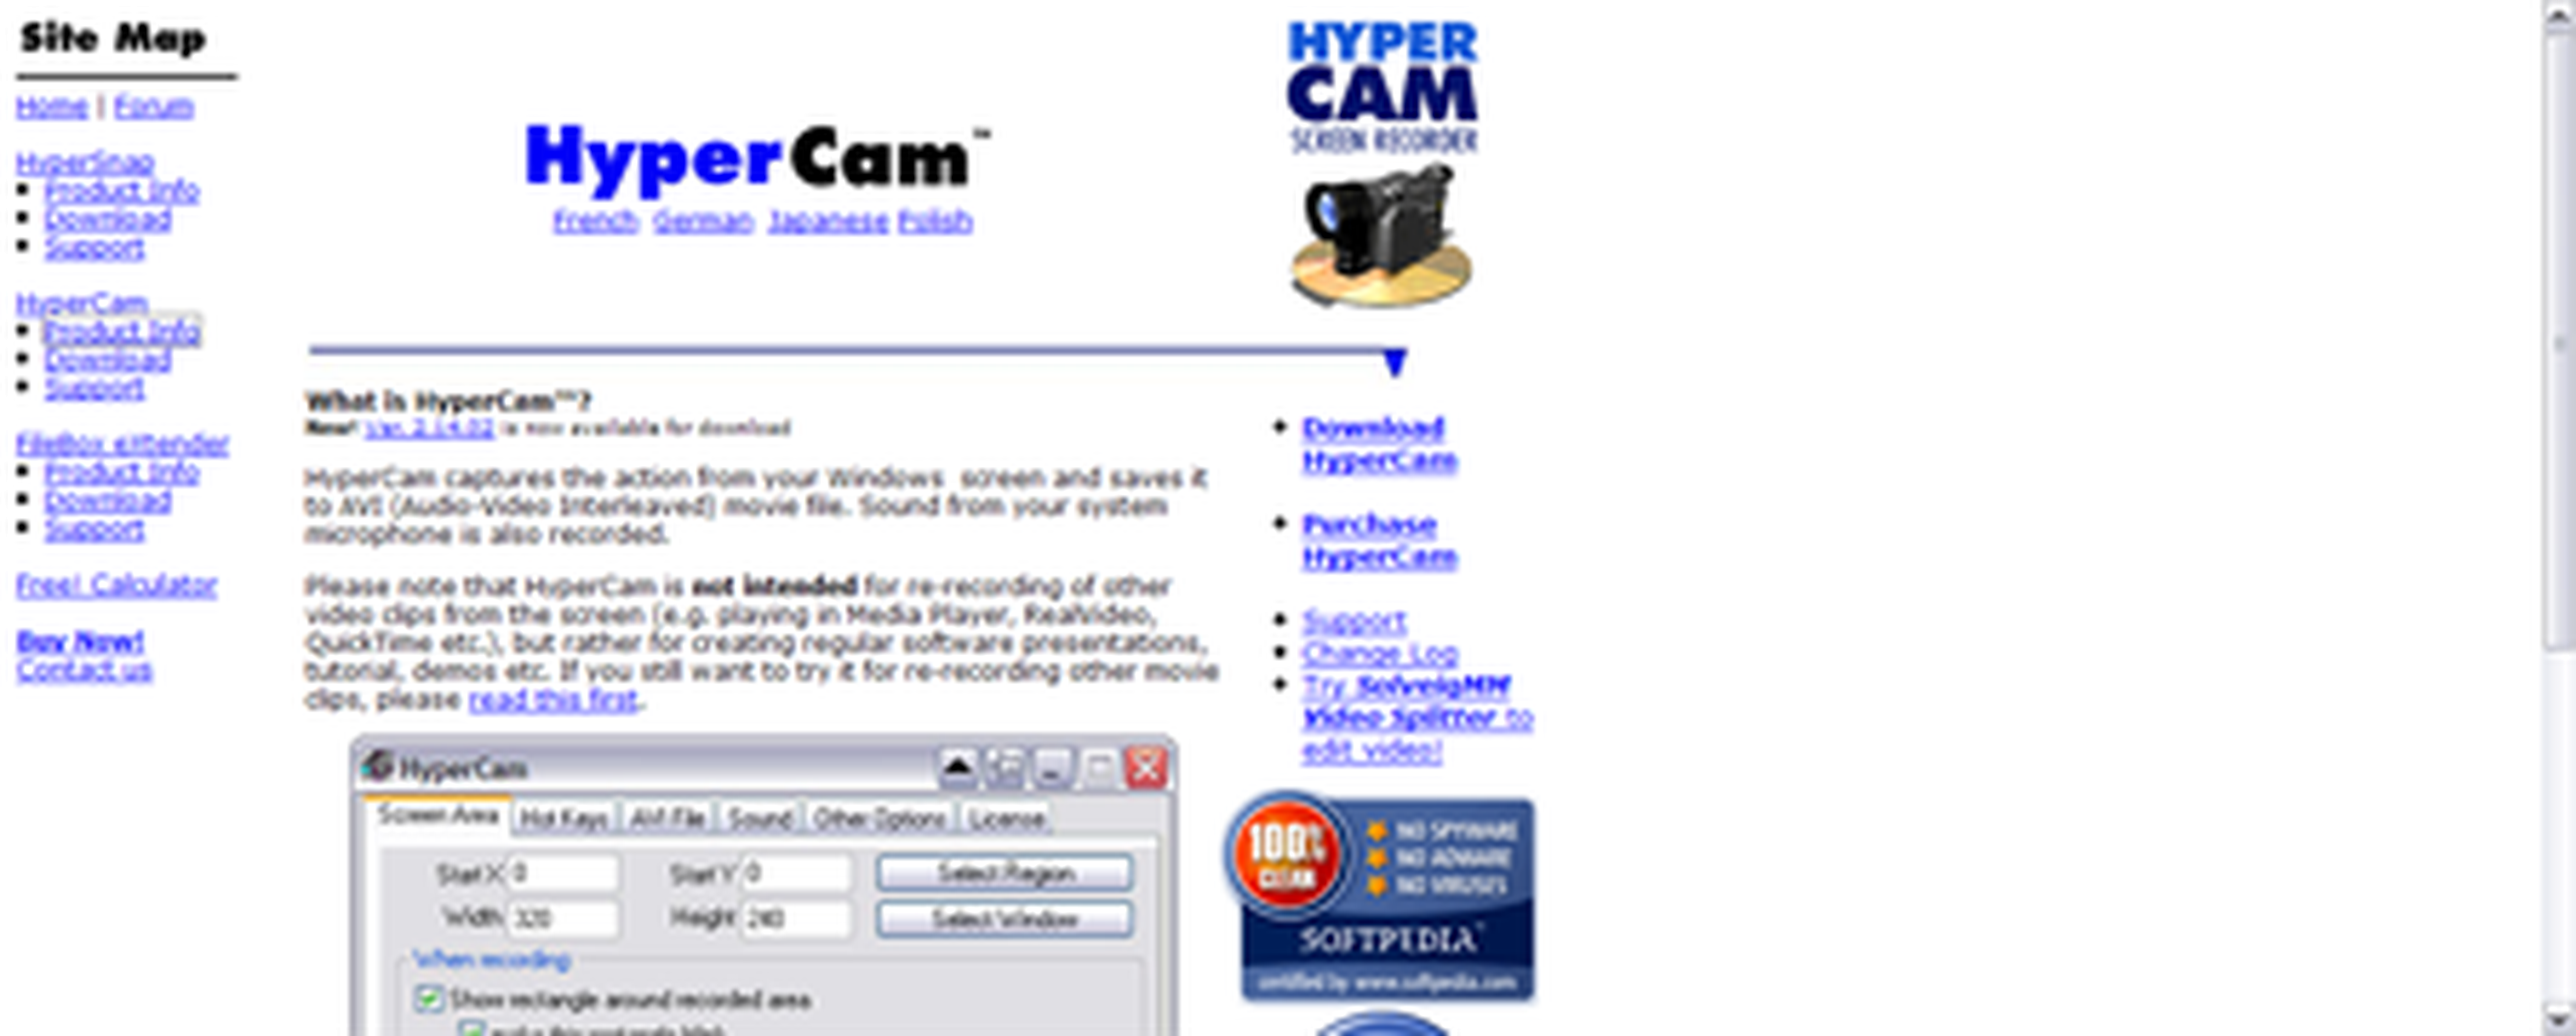 Hypercam 3 download free mac download